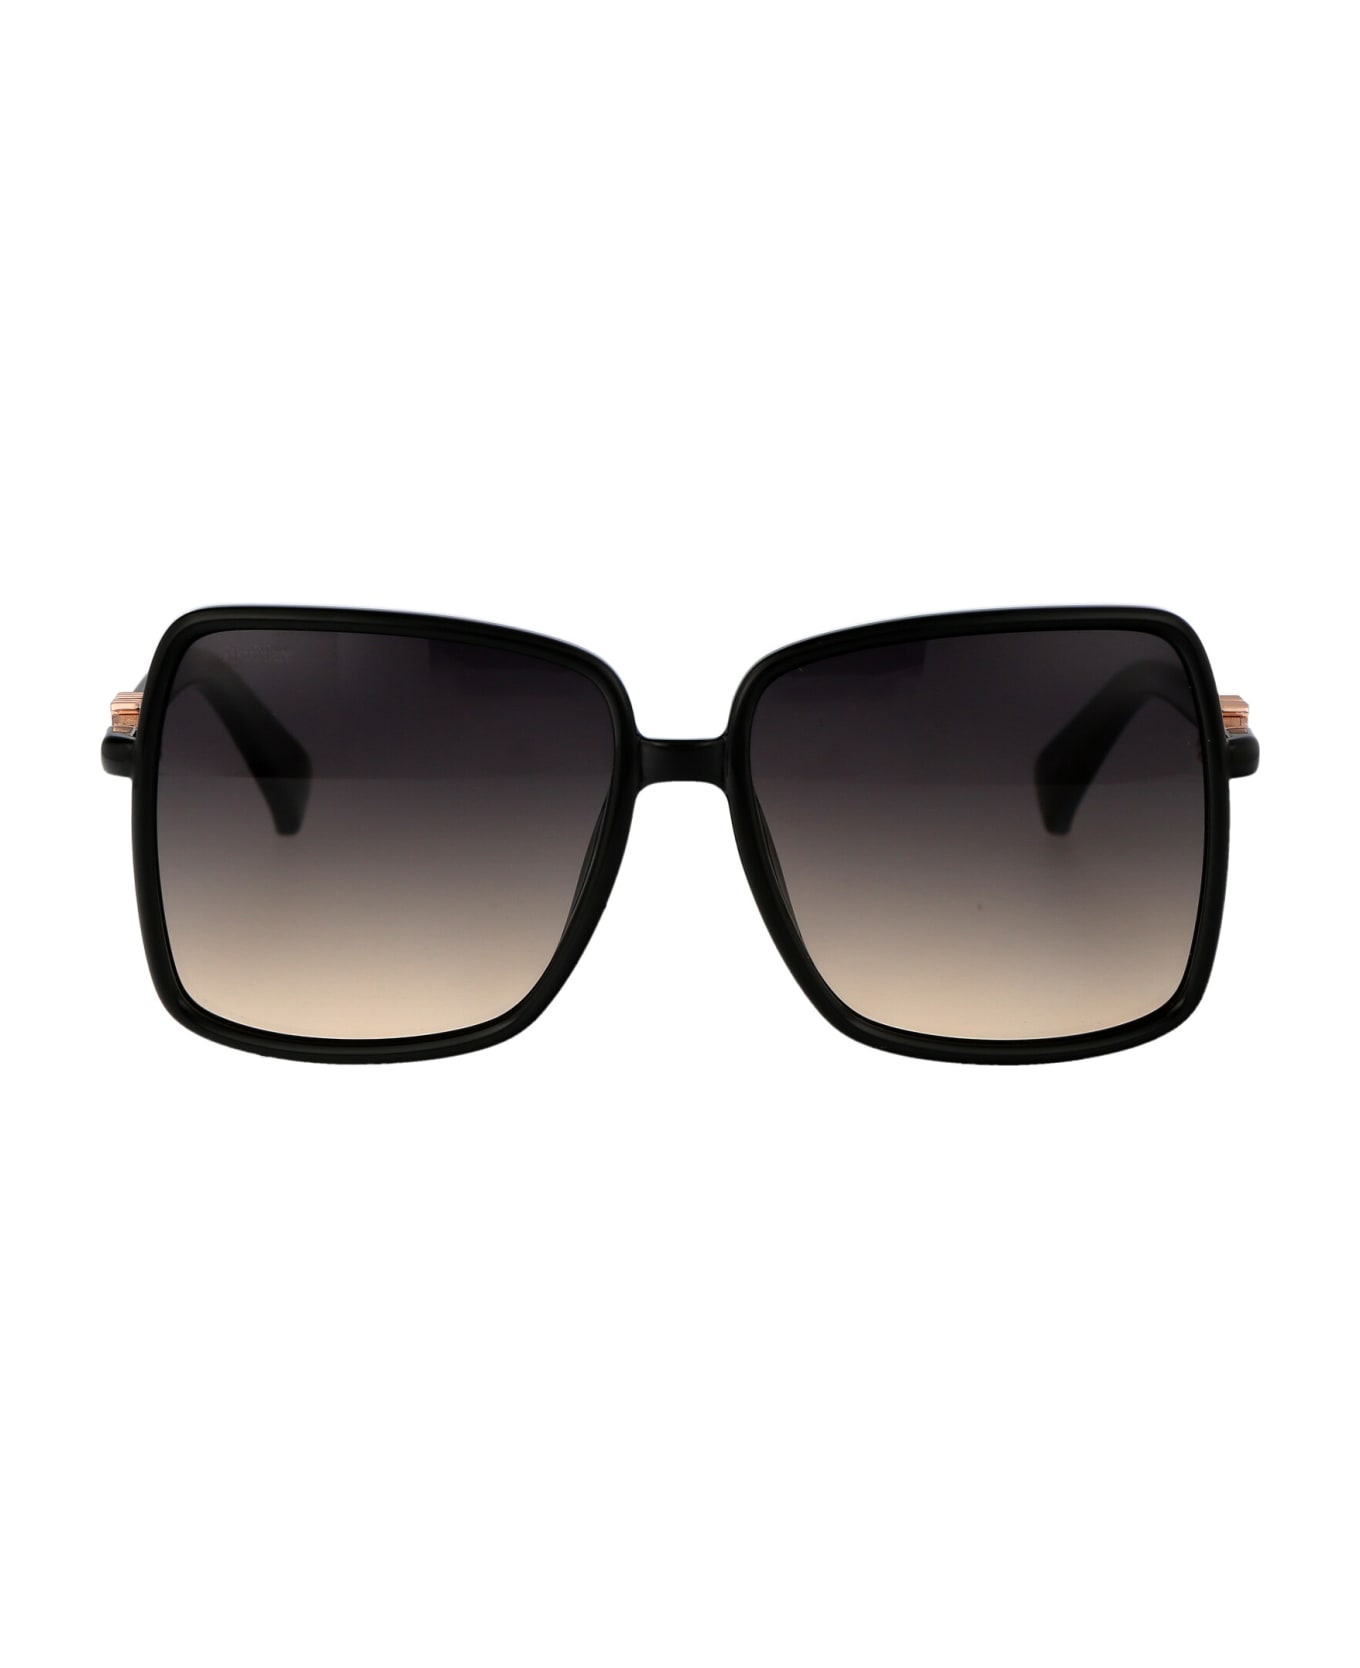 Max Mara Emme14 Sunglasses - 01B Nero Lucido/Fumo Grad サングラス